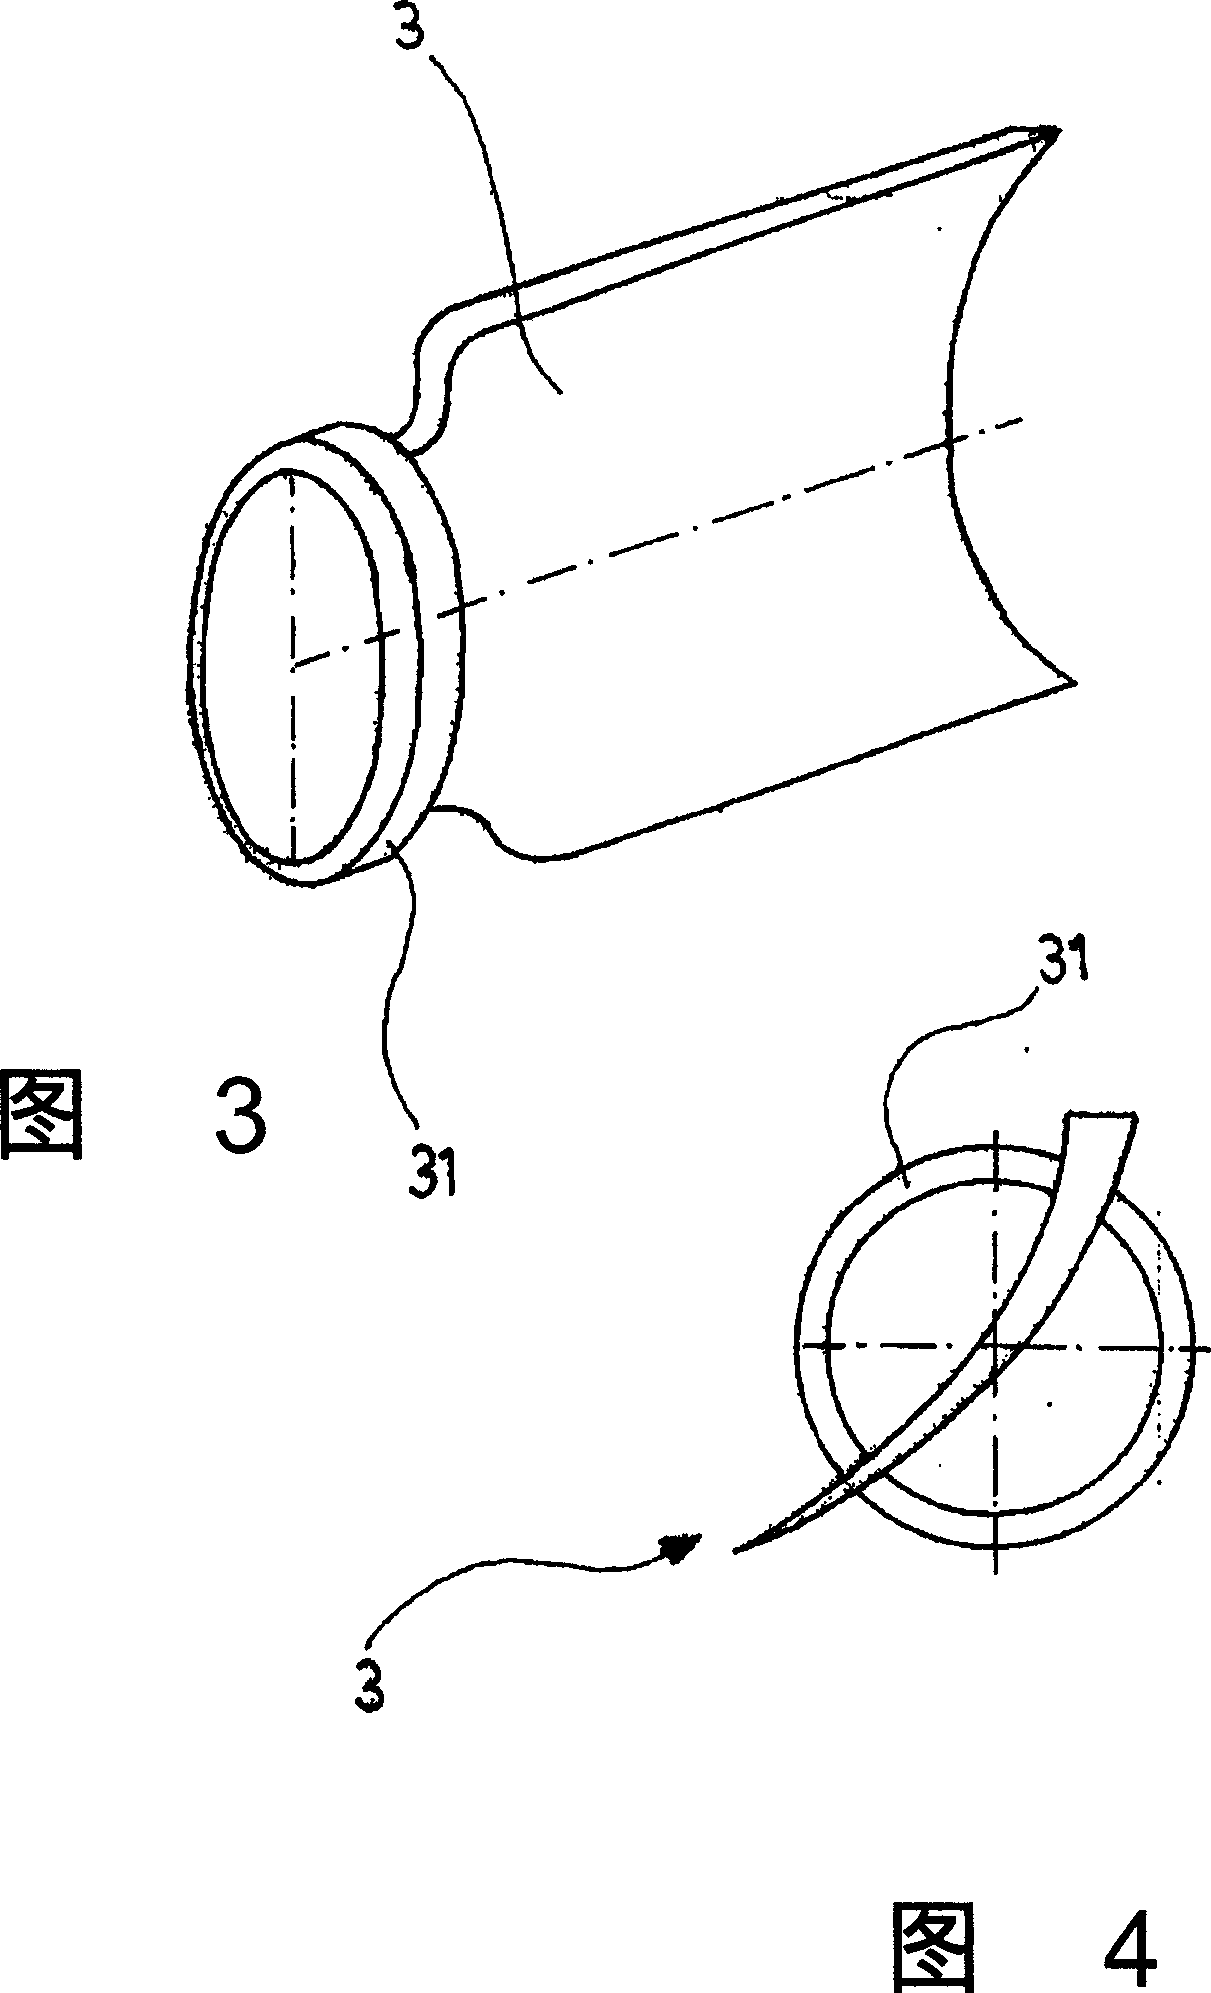 Boat propeller and method for assembling the same